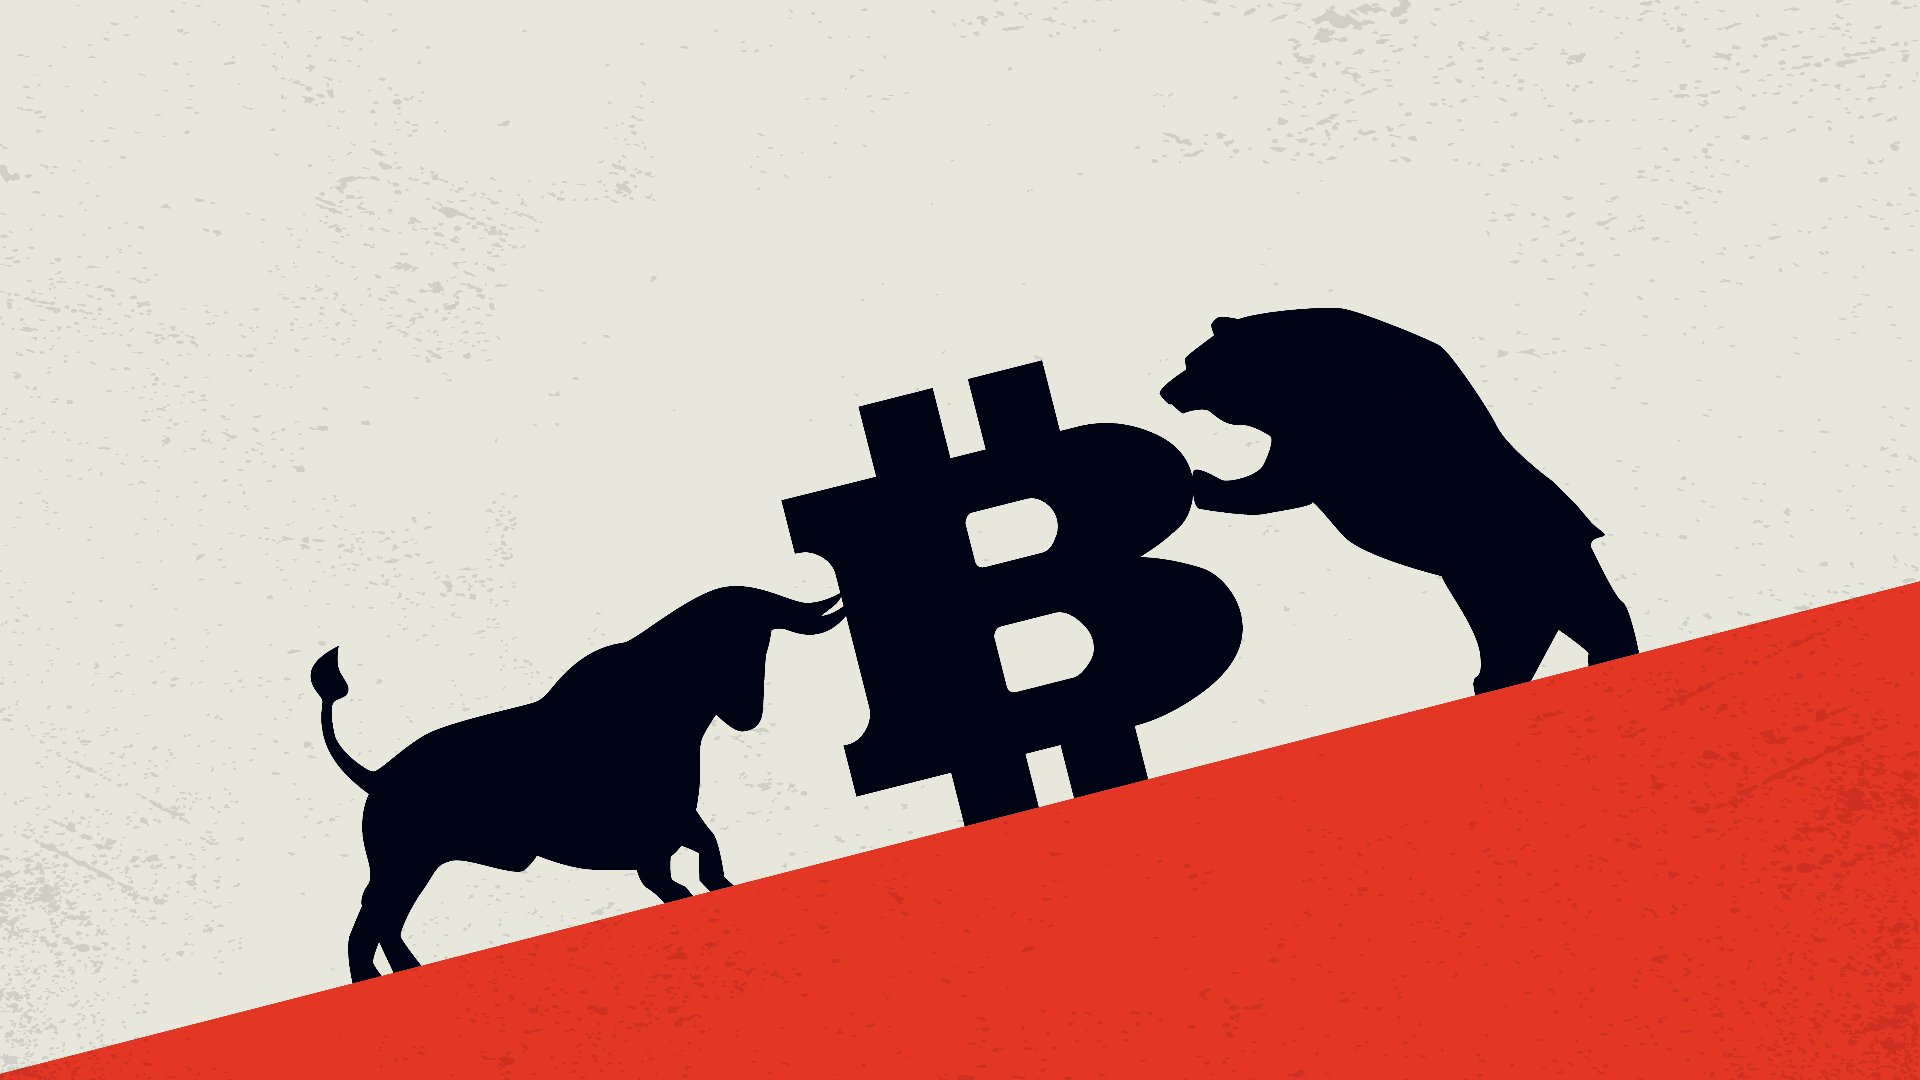 Bitcoin price bear market july 25th 2022 themerkle